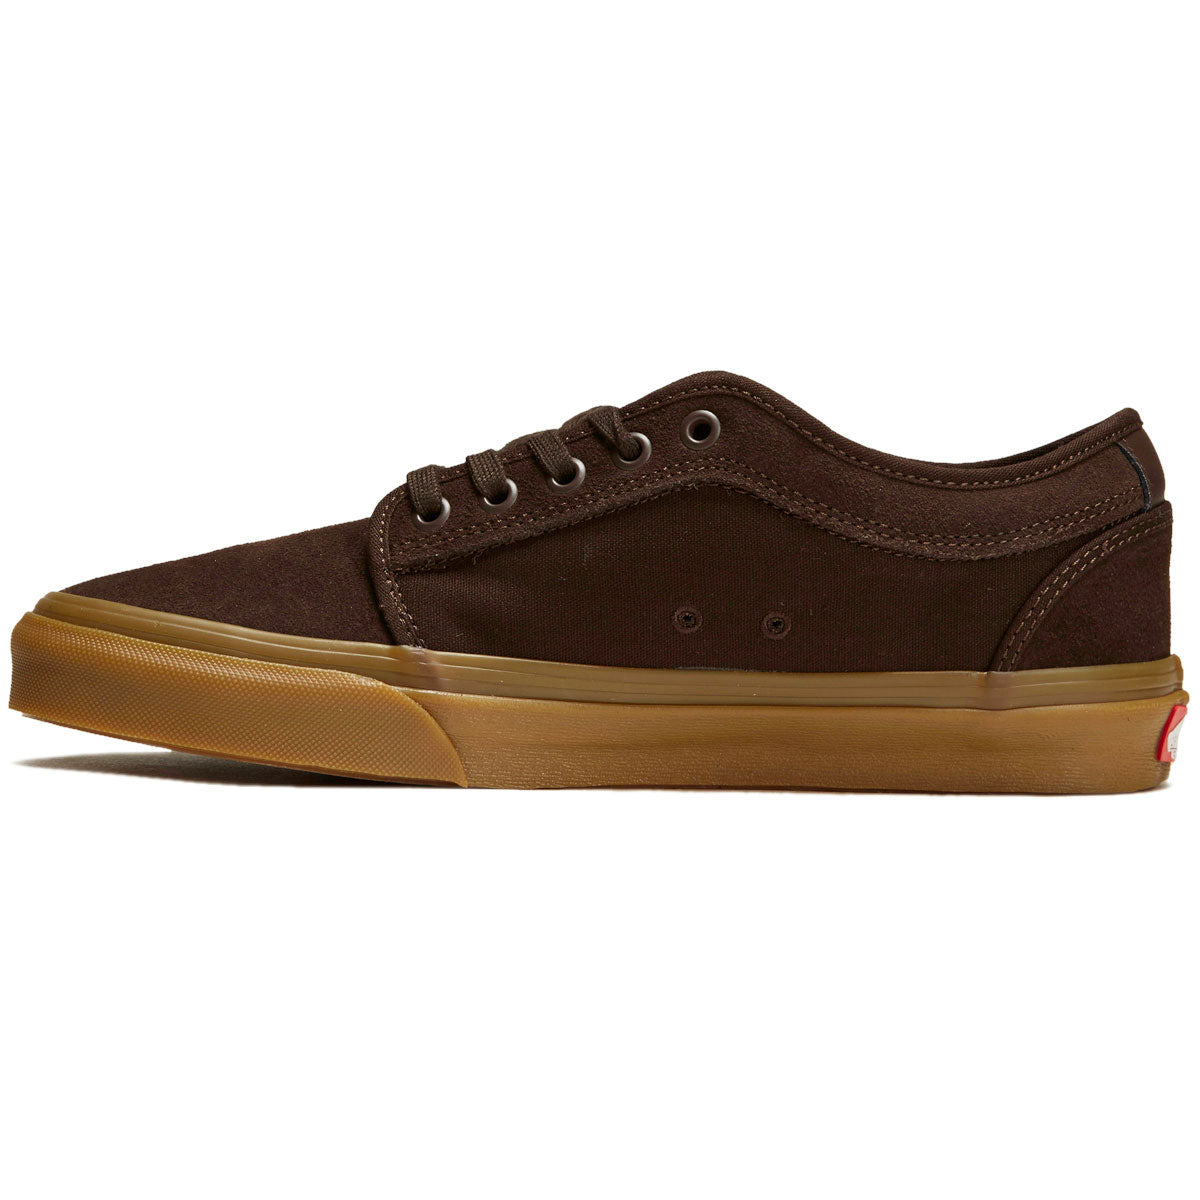 Vans Skate Chukka Low Shoes - Dark Brown/Gum image 2